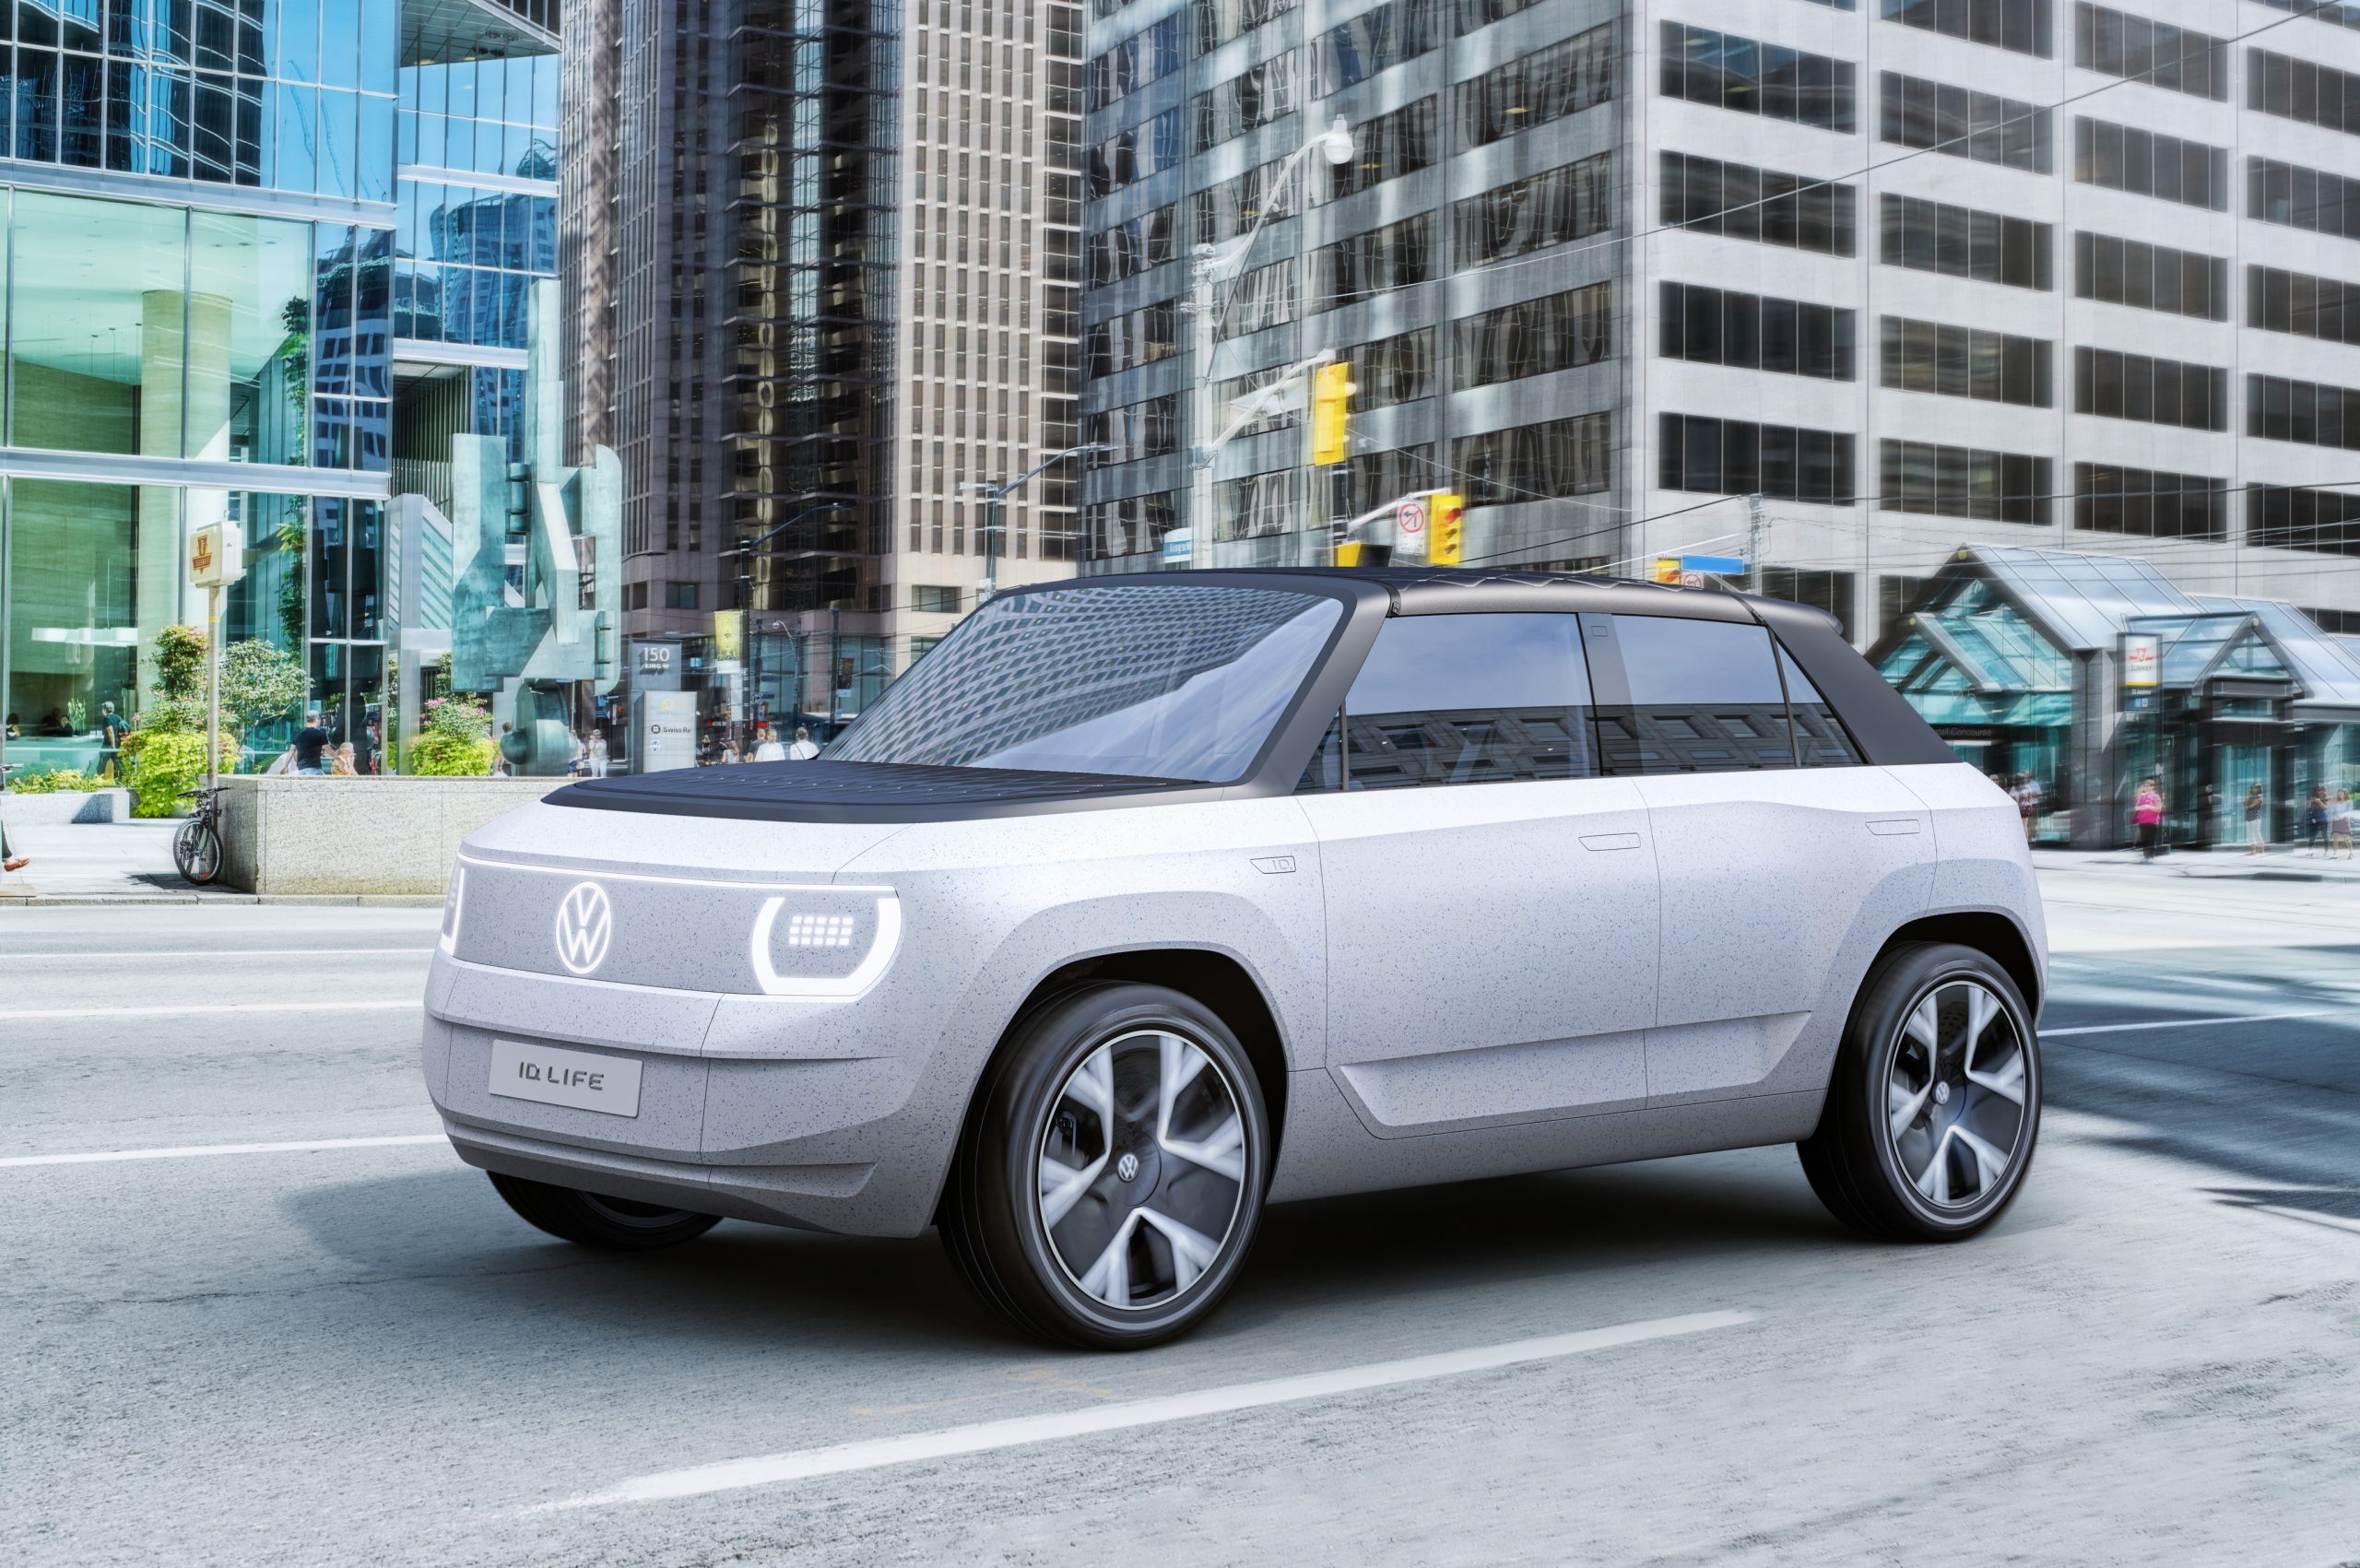 Volkswagen yeni konsept otomobilini tanıttı: ID. LIFE